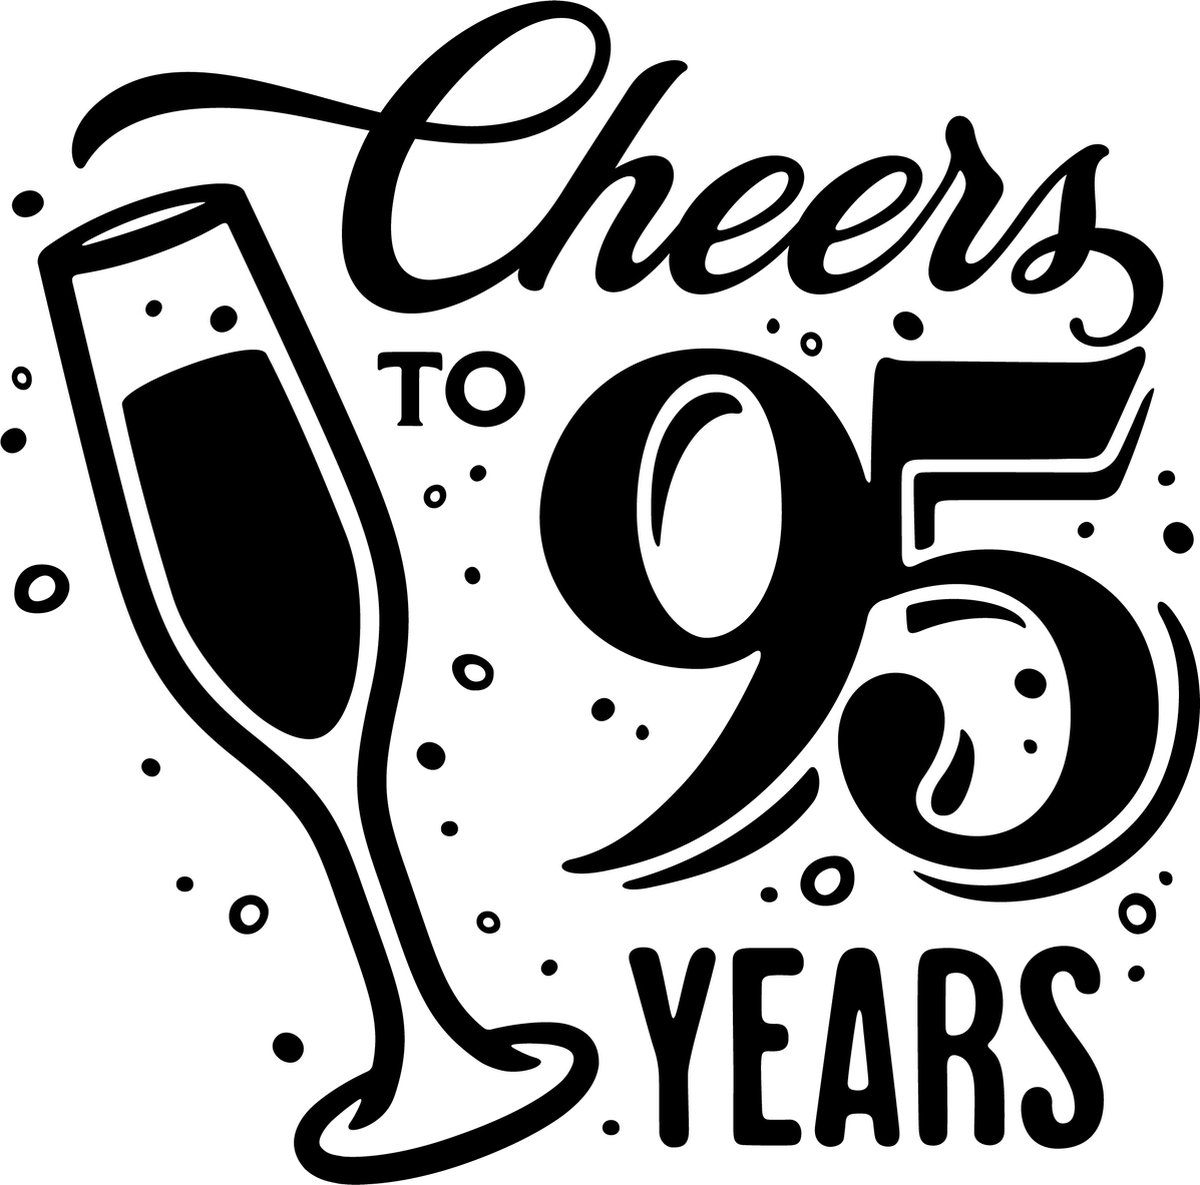 Sticker - Cheers to 95 years - 20x20cm - wit - 1 stuks - stickers - verjaardag - verjaardag decoratie - verjaardag versiering - feest - feest versiering - feestartikelen - raamstickers - raamsticker - Stickers volwassenen